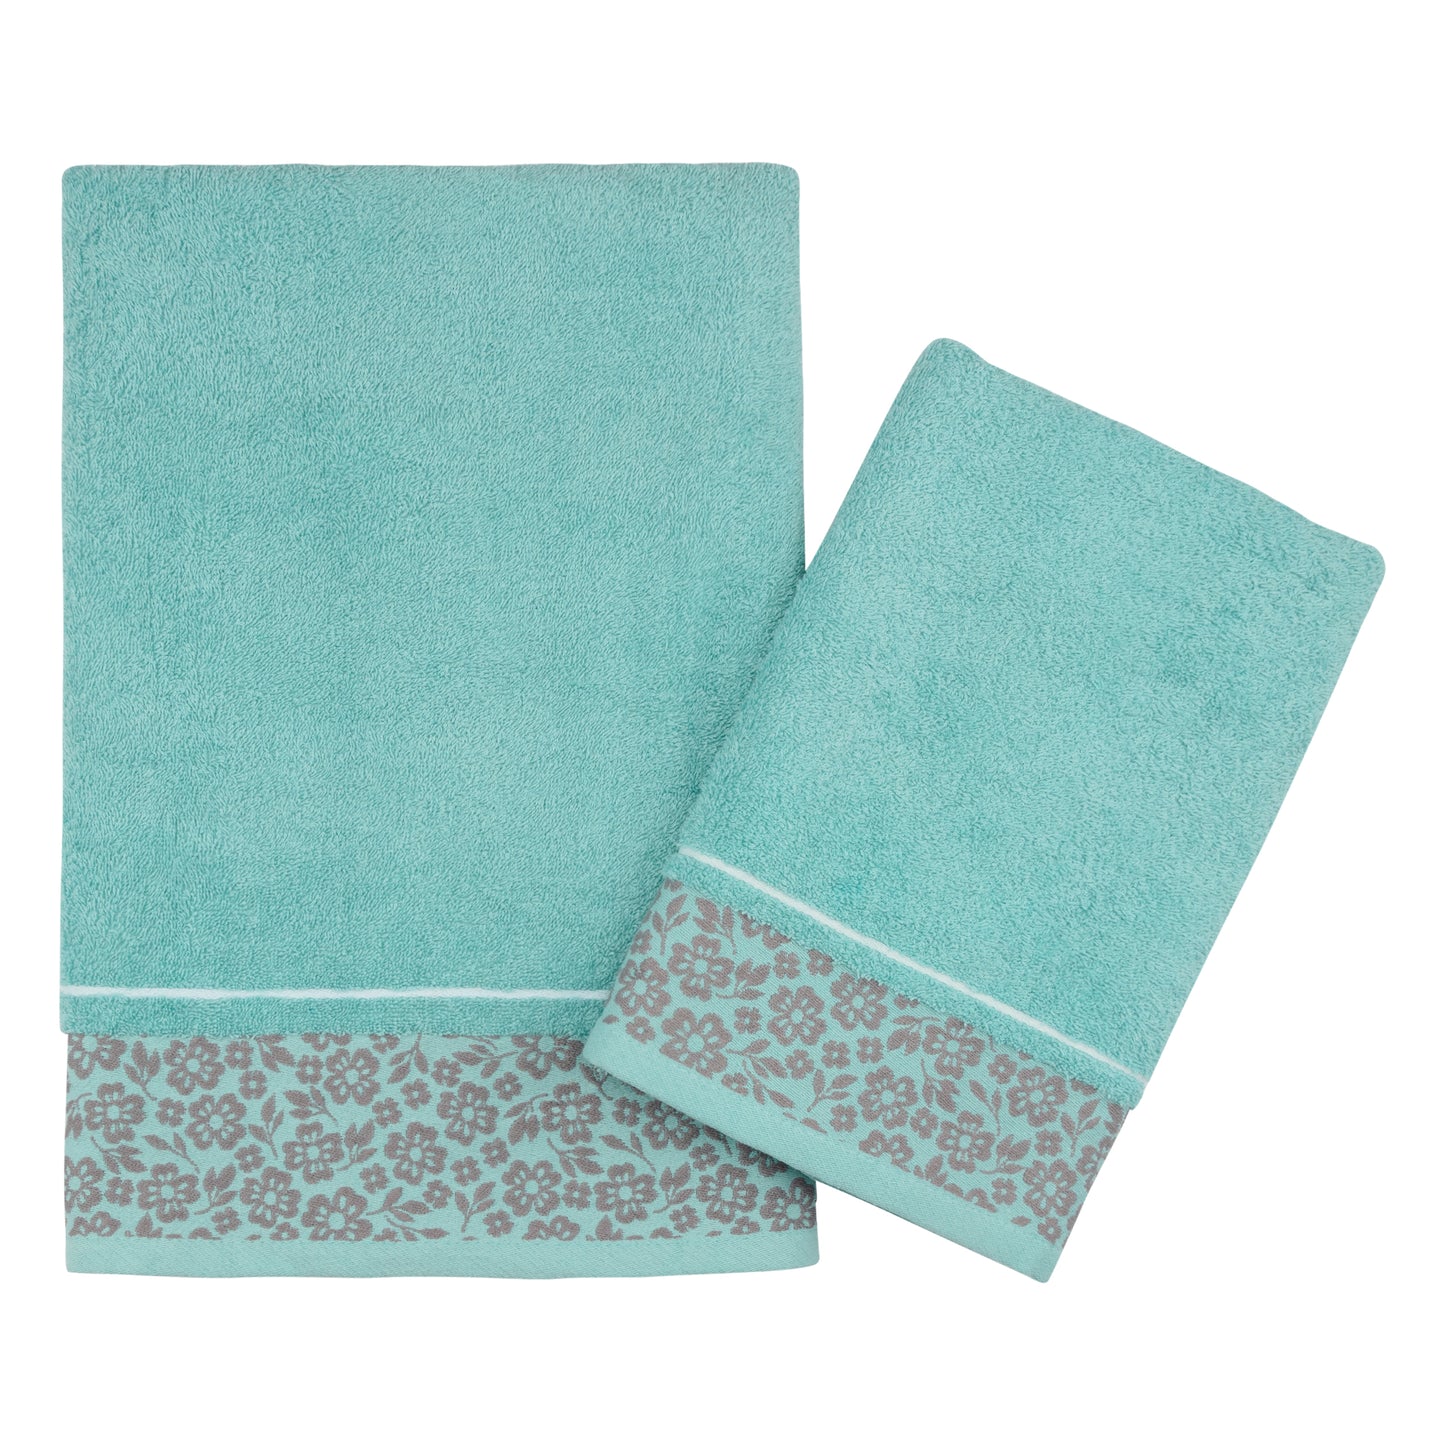  Jacquard Cotton soft grey blue embellished towel Canada USA